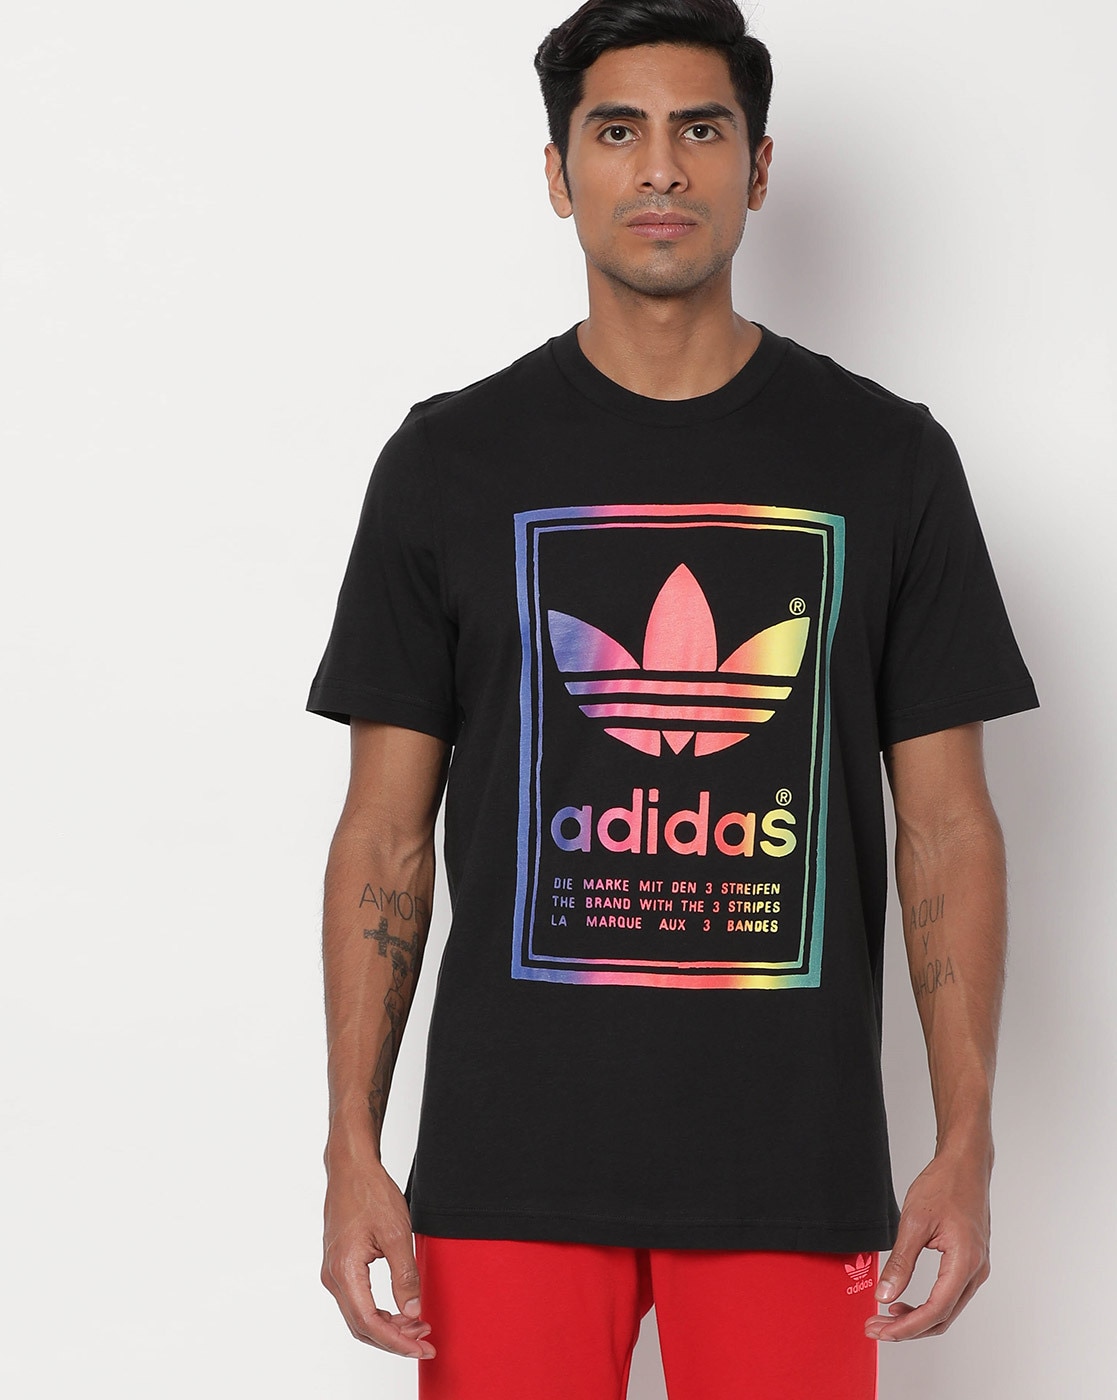 Tshirts for Men by Adidas Originals 